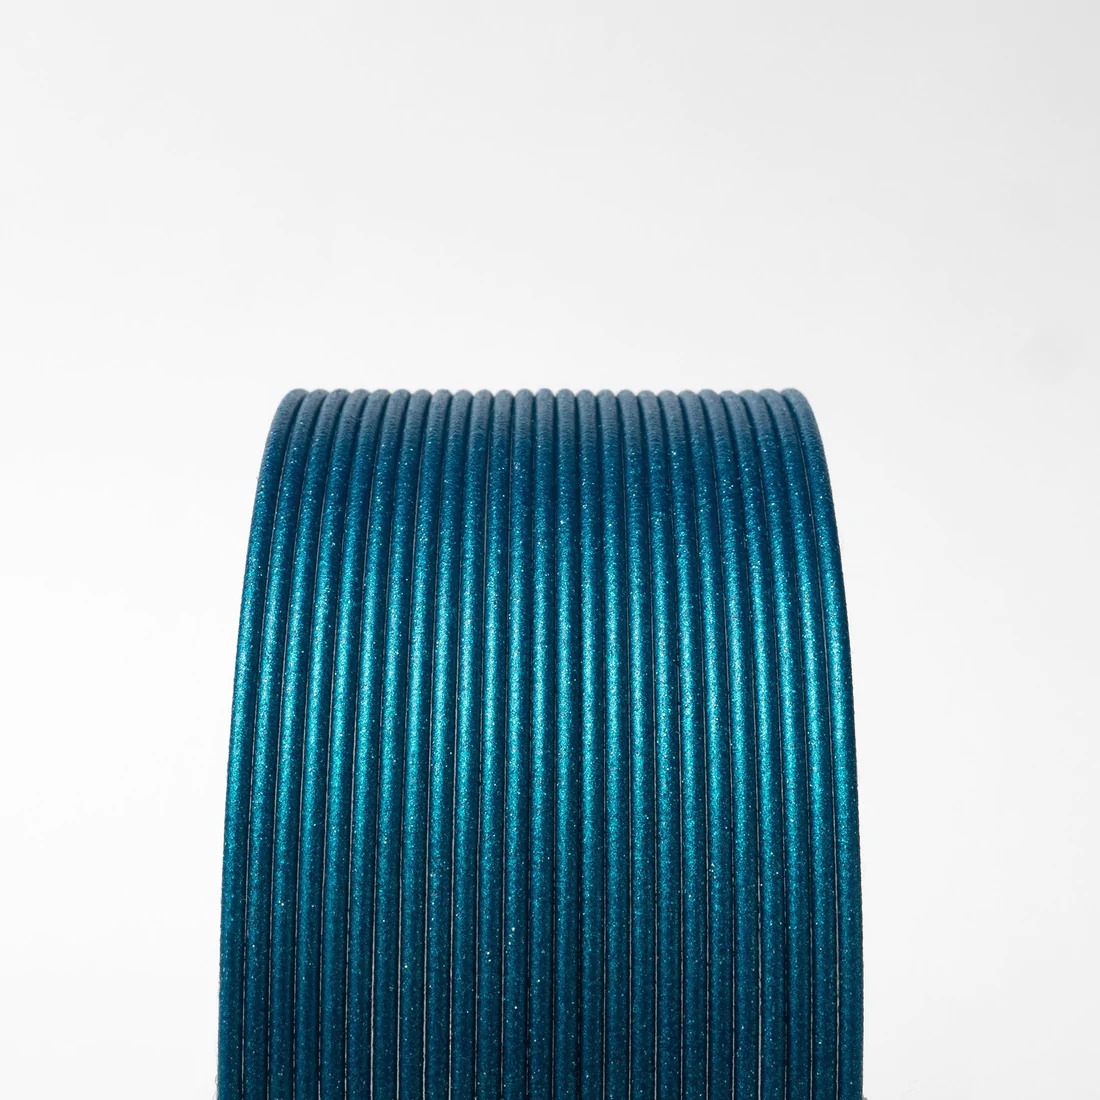 Mermaids Tale Metallic Teal HTPLA  Proto-pasta 2.85mm 500gms 3D printing filament